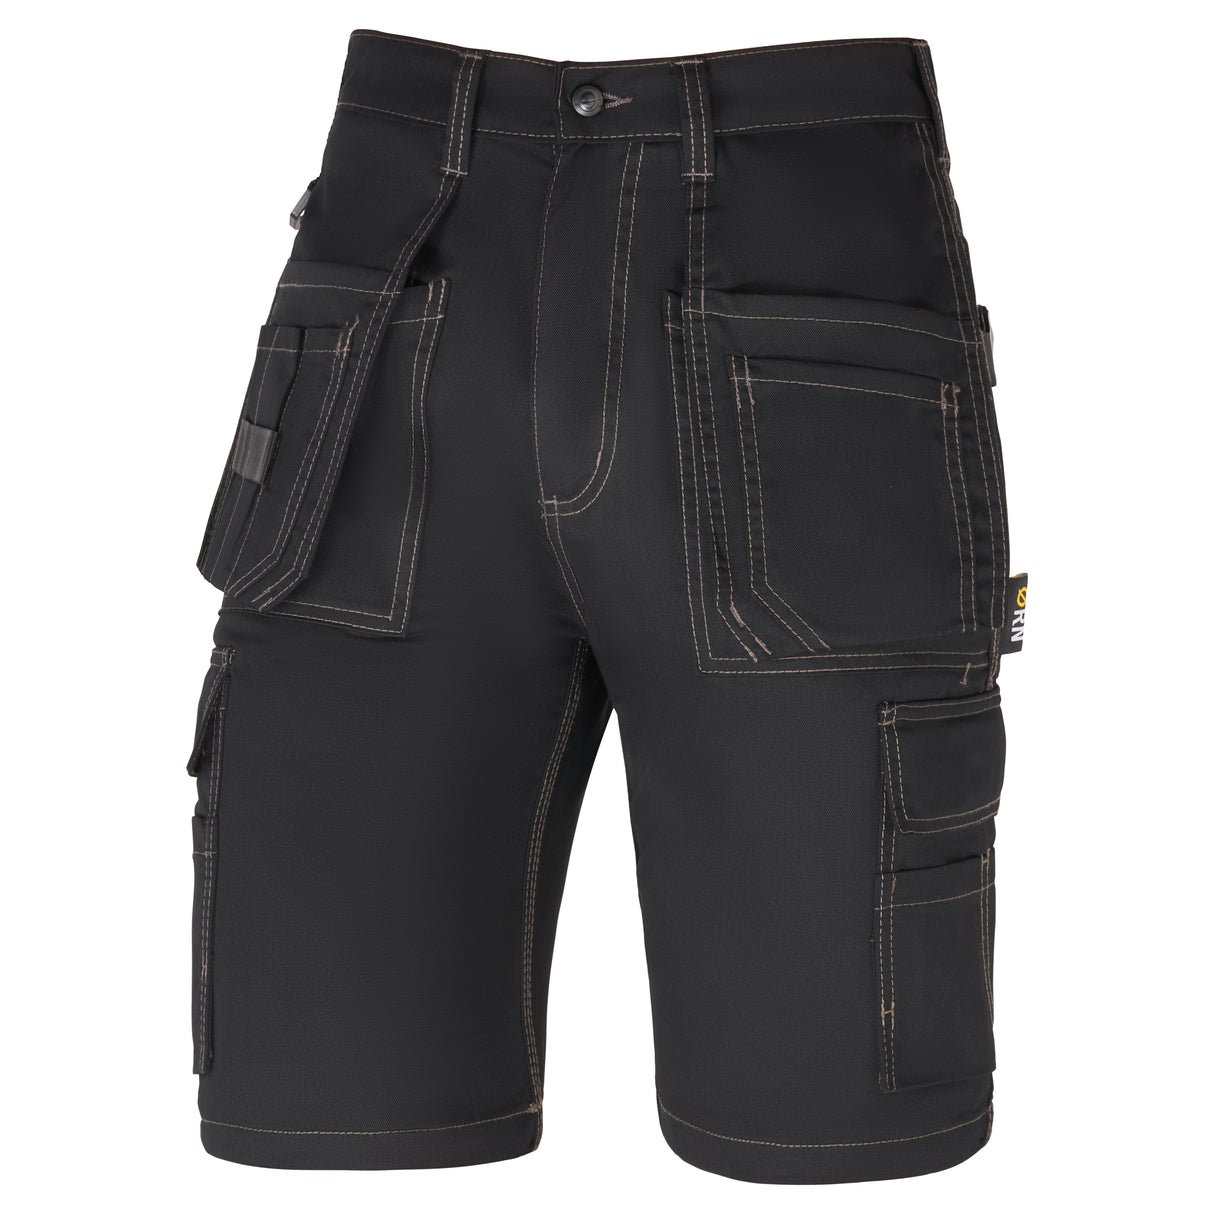 Orn Merlin Tradesman Shorts -2080